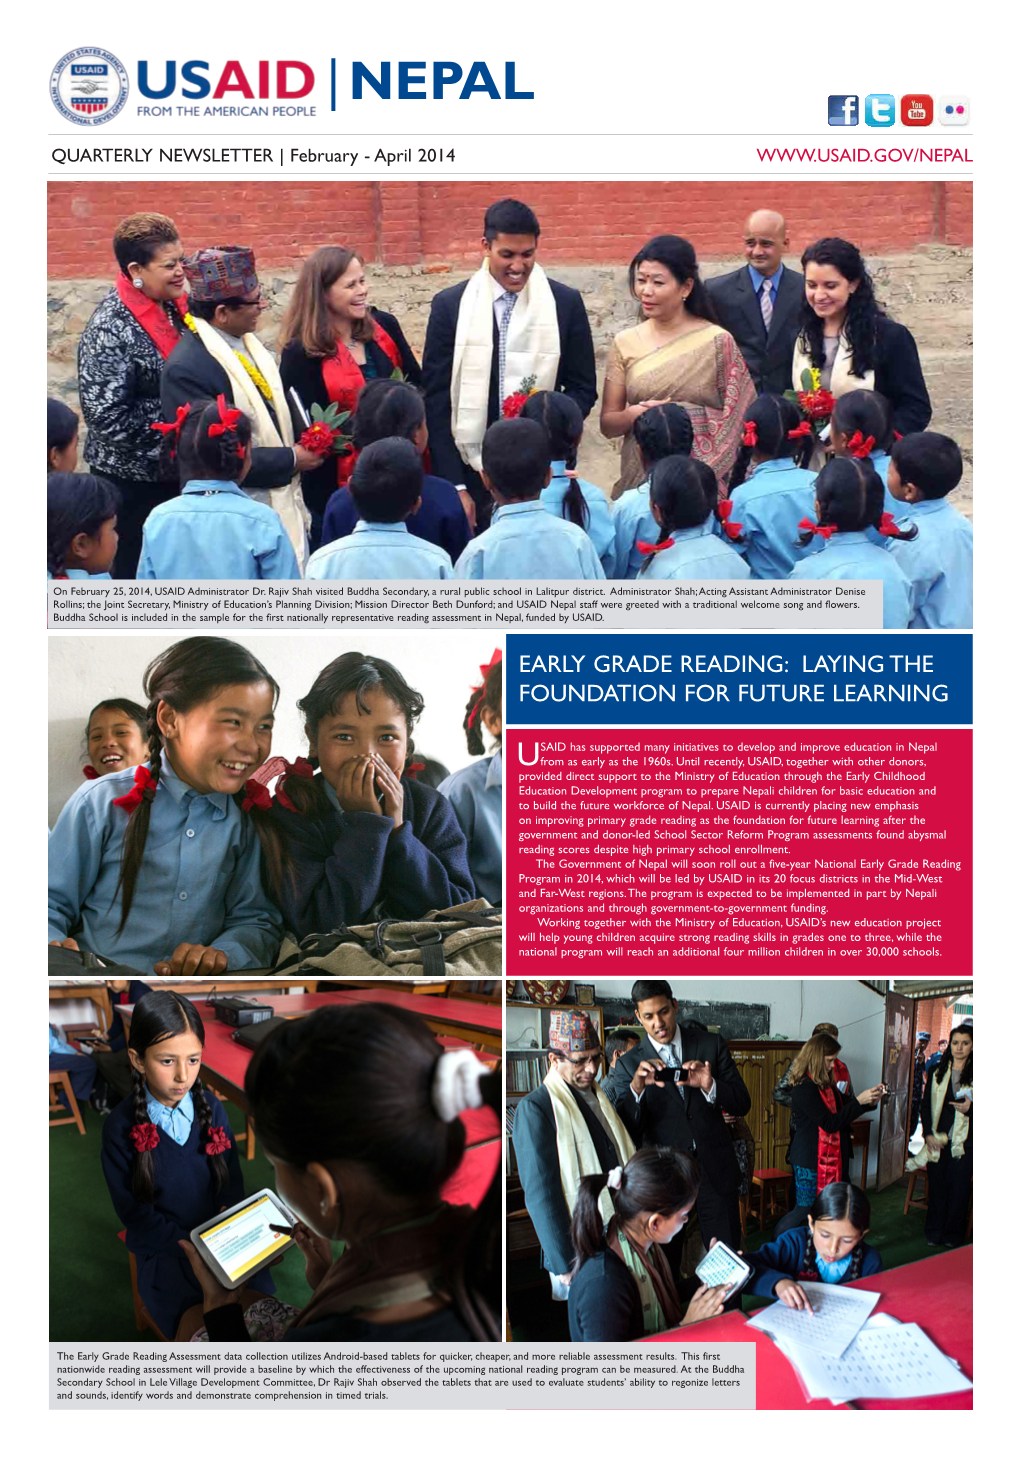 USAID/Nepal Quarterly Newsletter